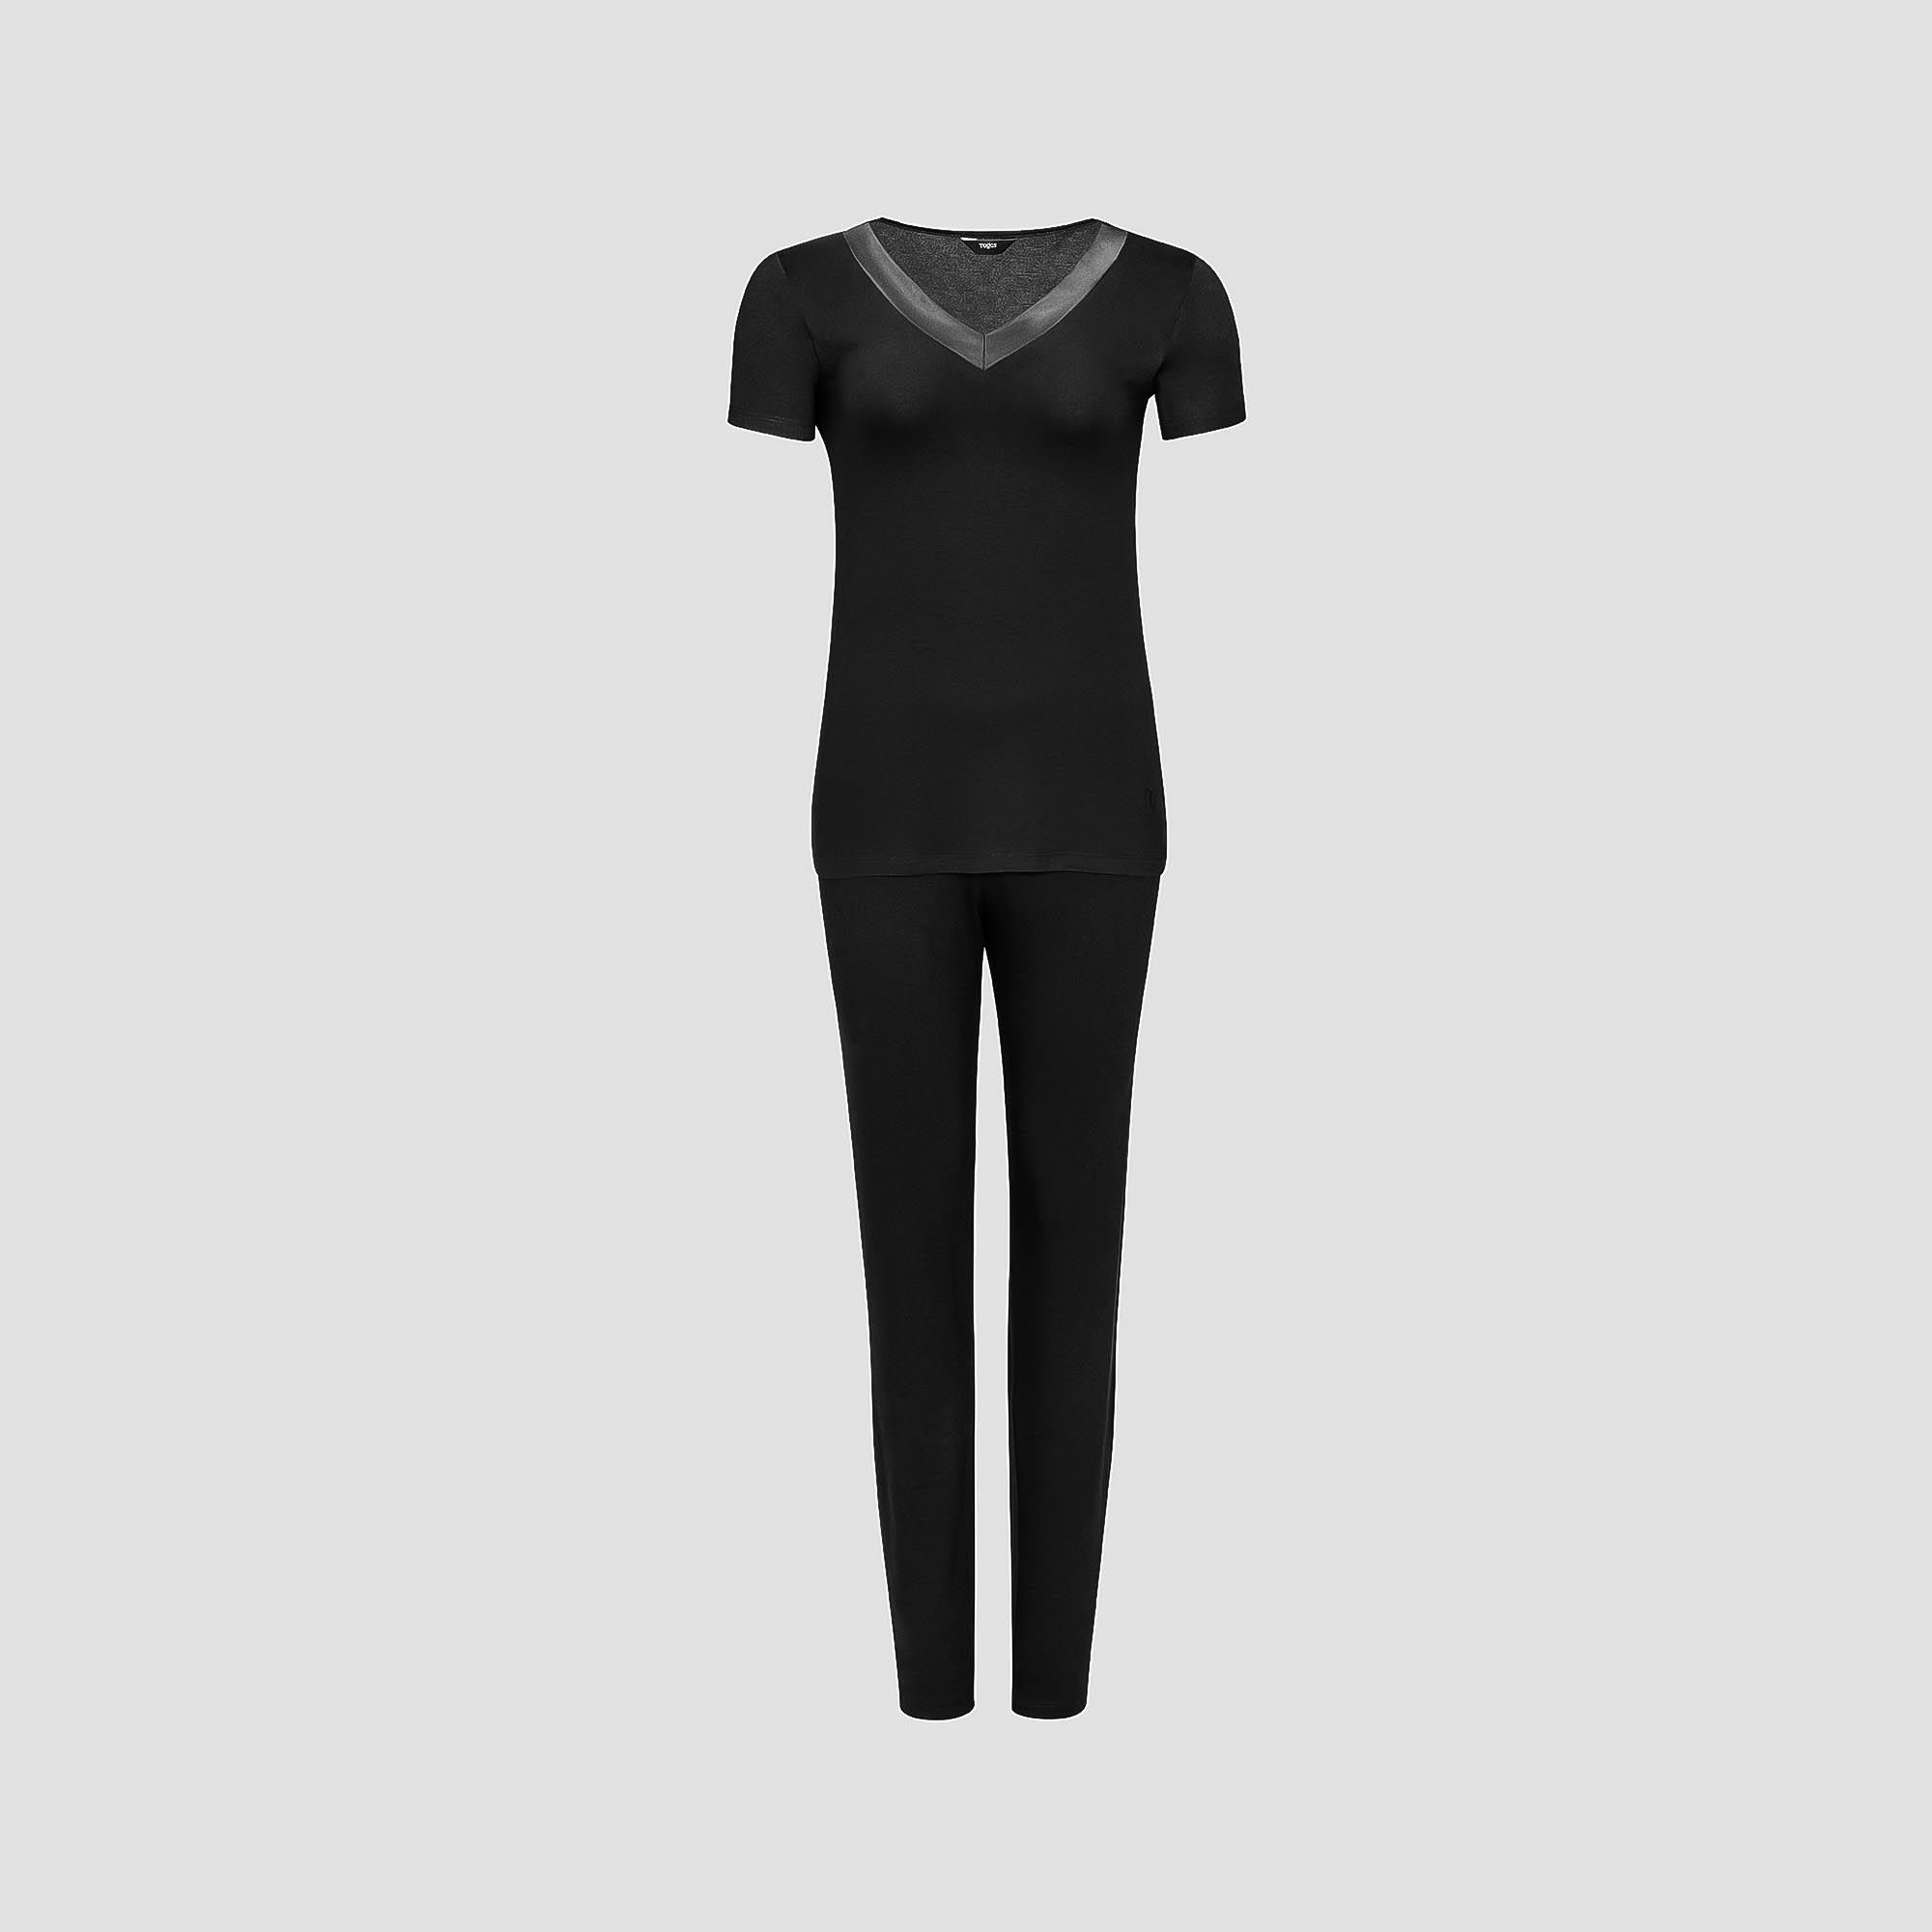 Пижама Togas Ингелла черная женская S(44) 2 предмета жен пижама с брюками арт 16 0693 баклажан р 54